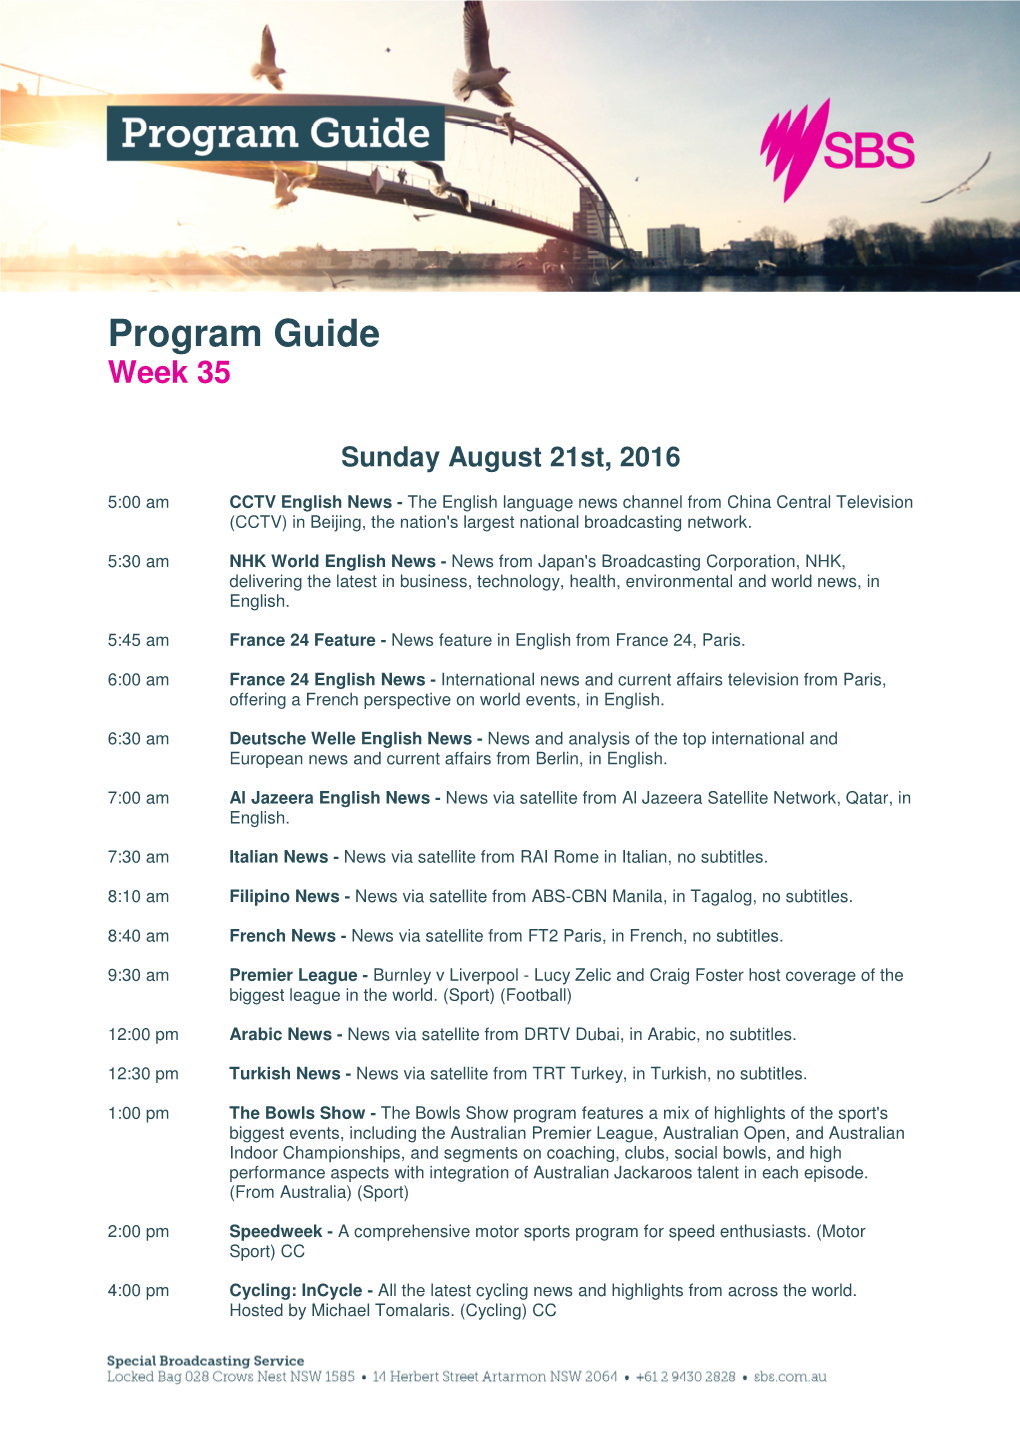 Program Guide Week 35